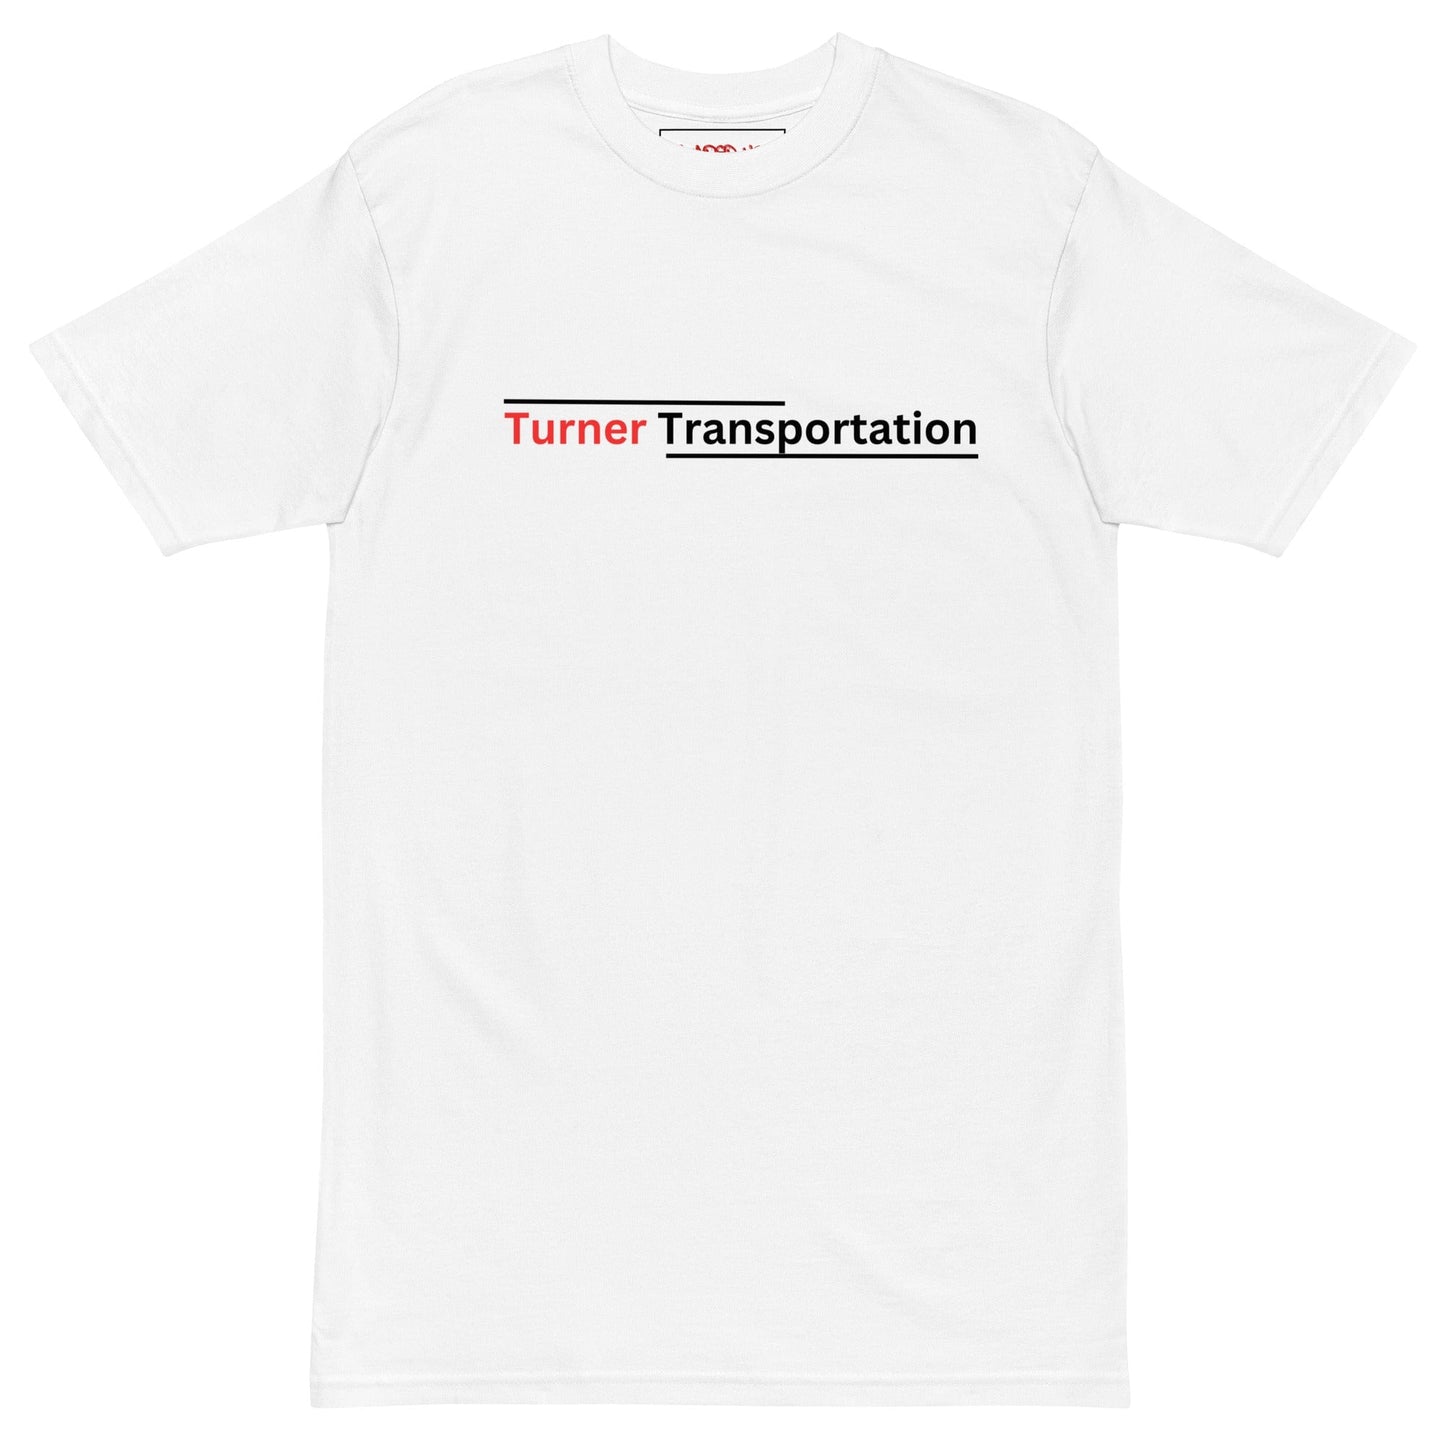 Transprotation T-shirt